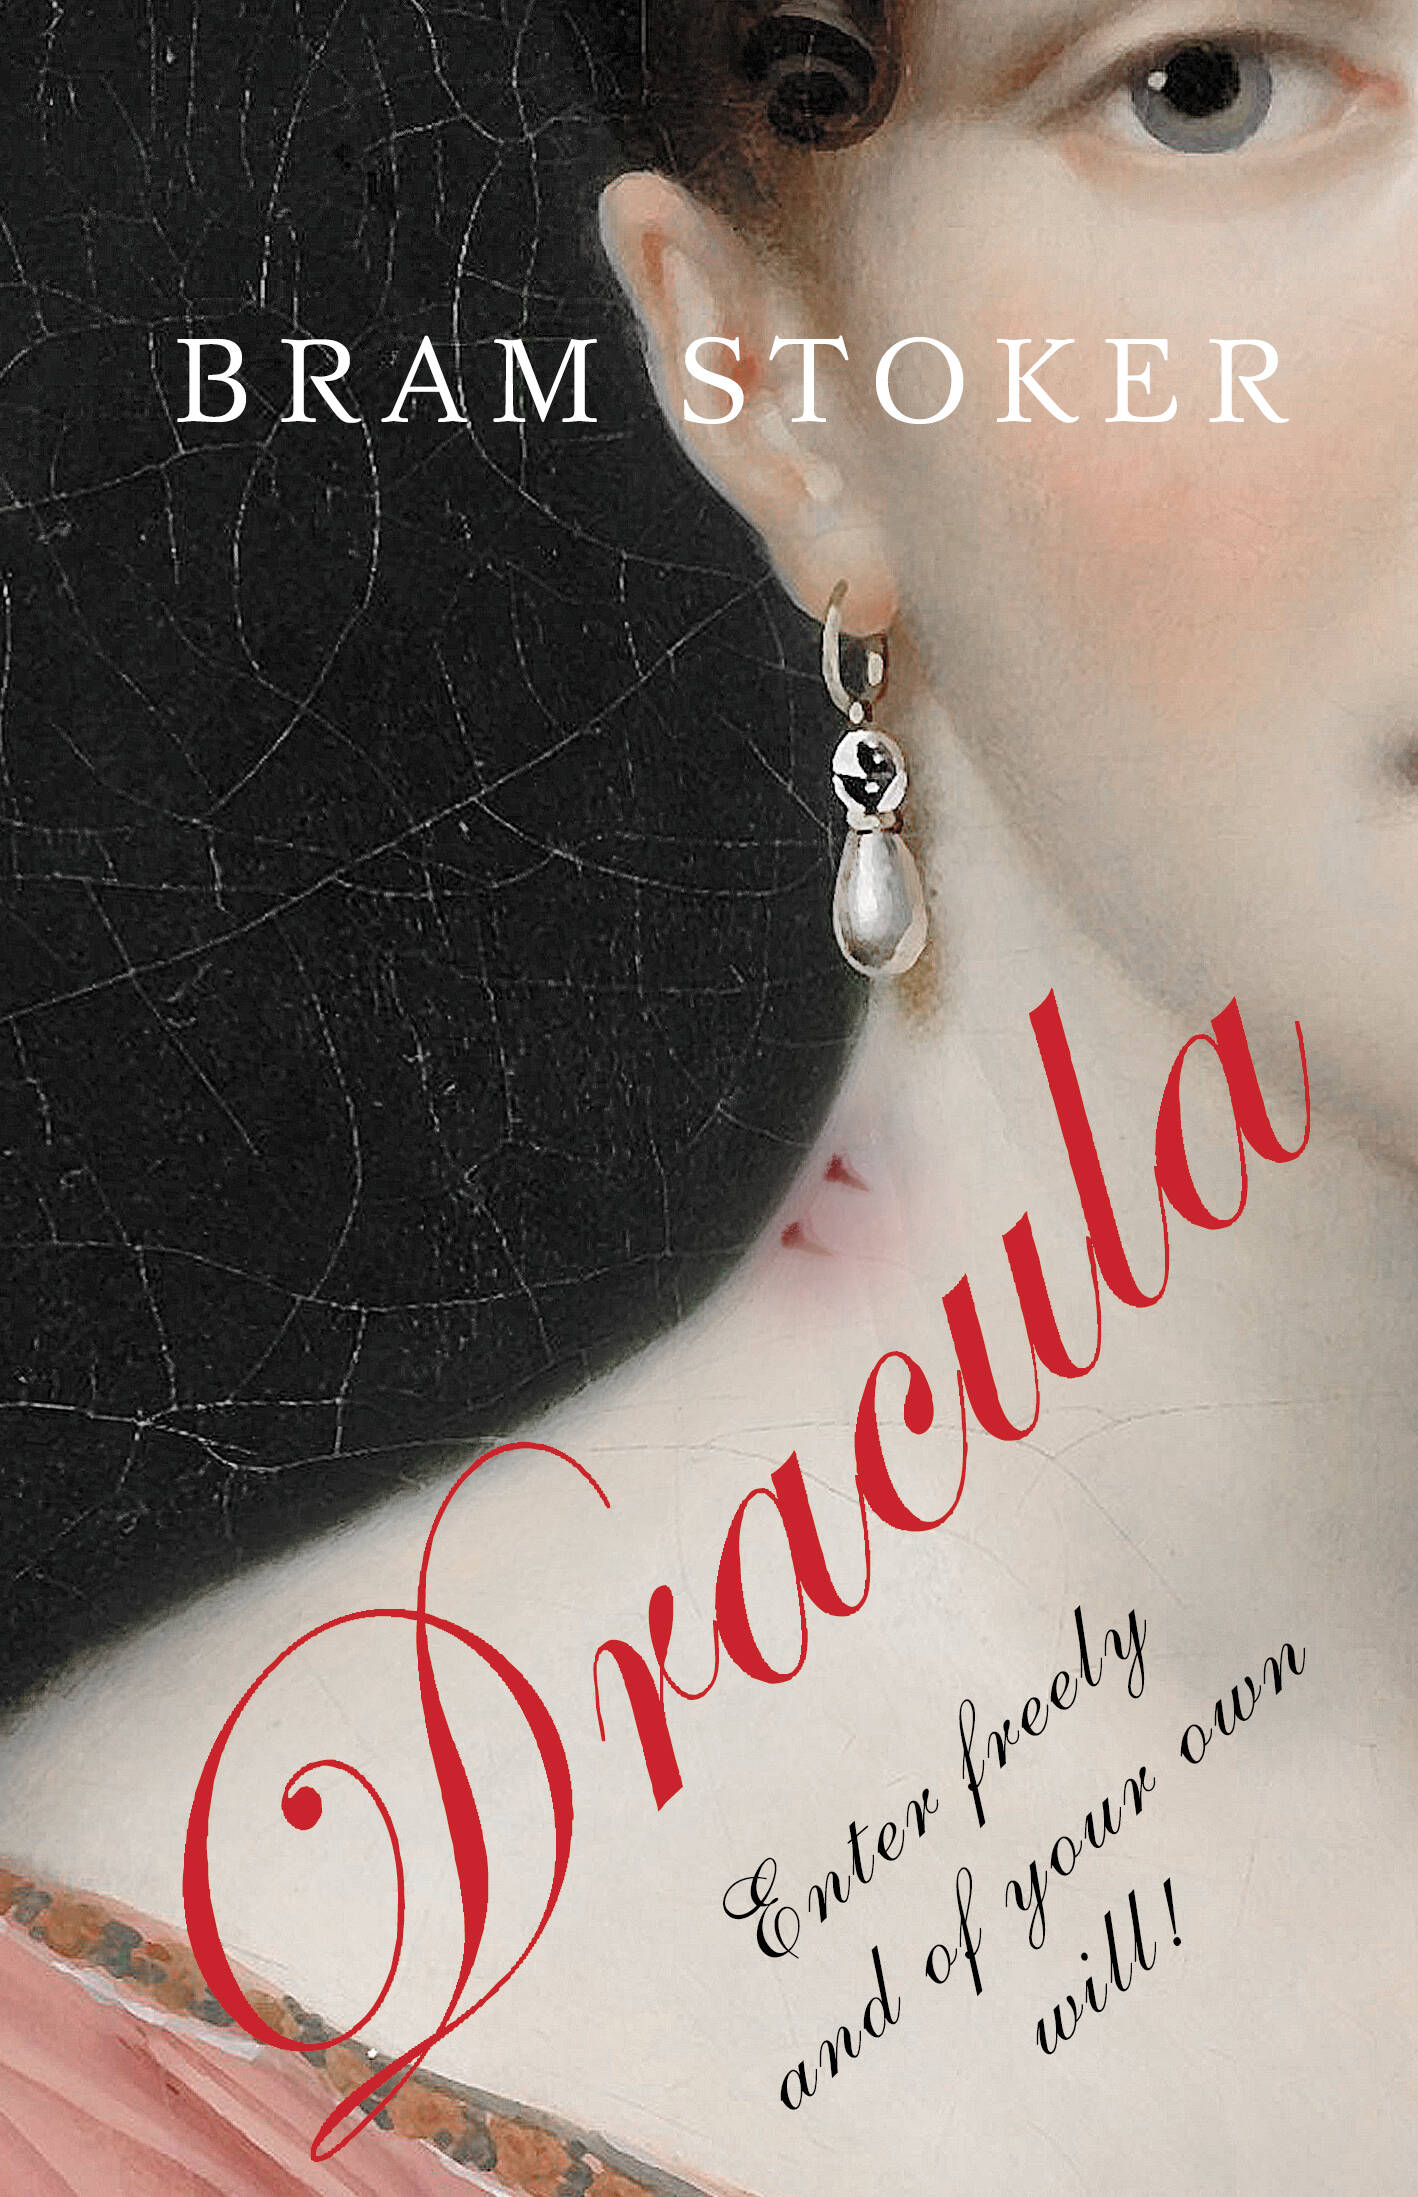 Stoker Bram Dracula виниловая пластинка ost bram stoker s dracula lp